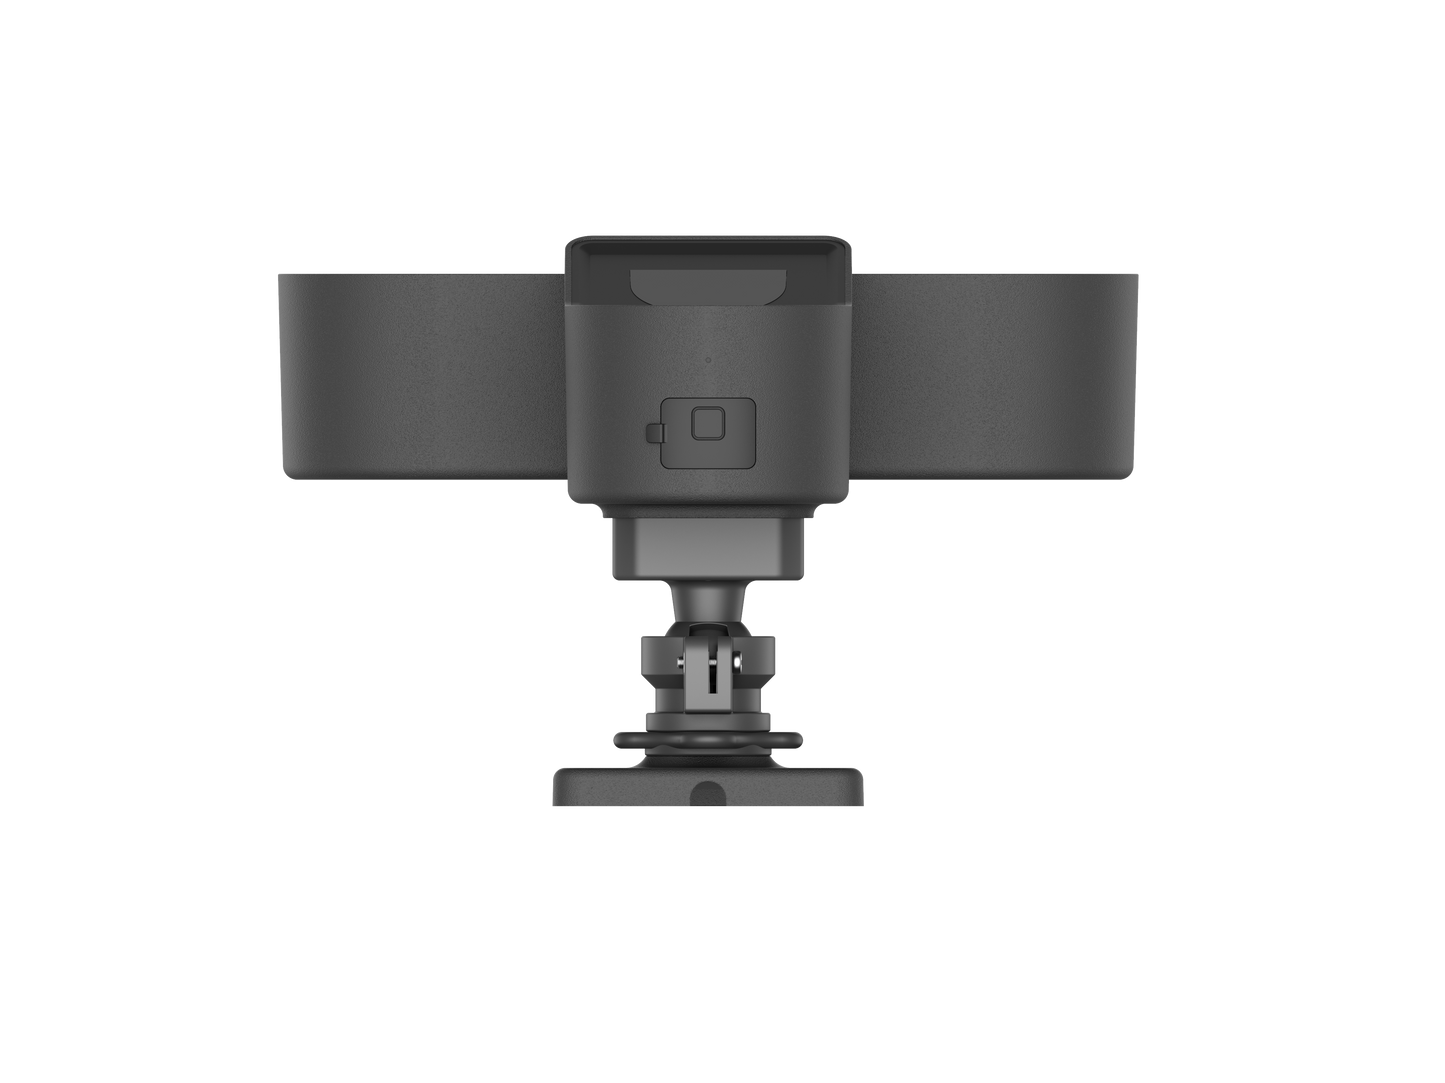 Smart Home 18W Tuya Floodlight WiFi Camera 1080P 2MP PIR Detection Two-Way Audio Night Vision LED Light Camera